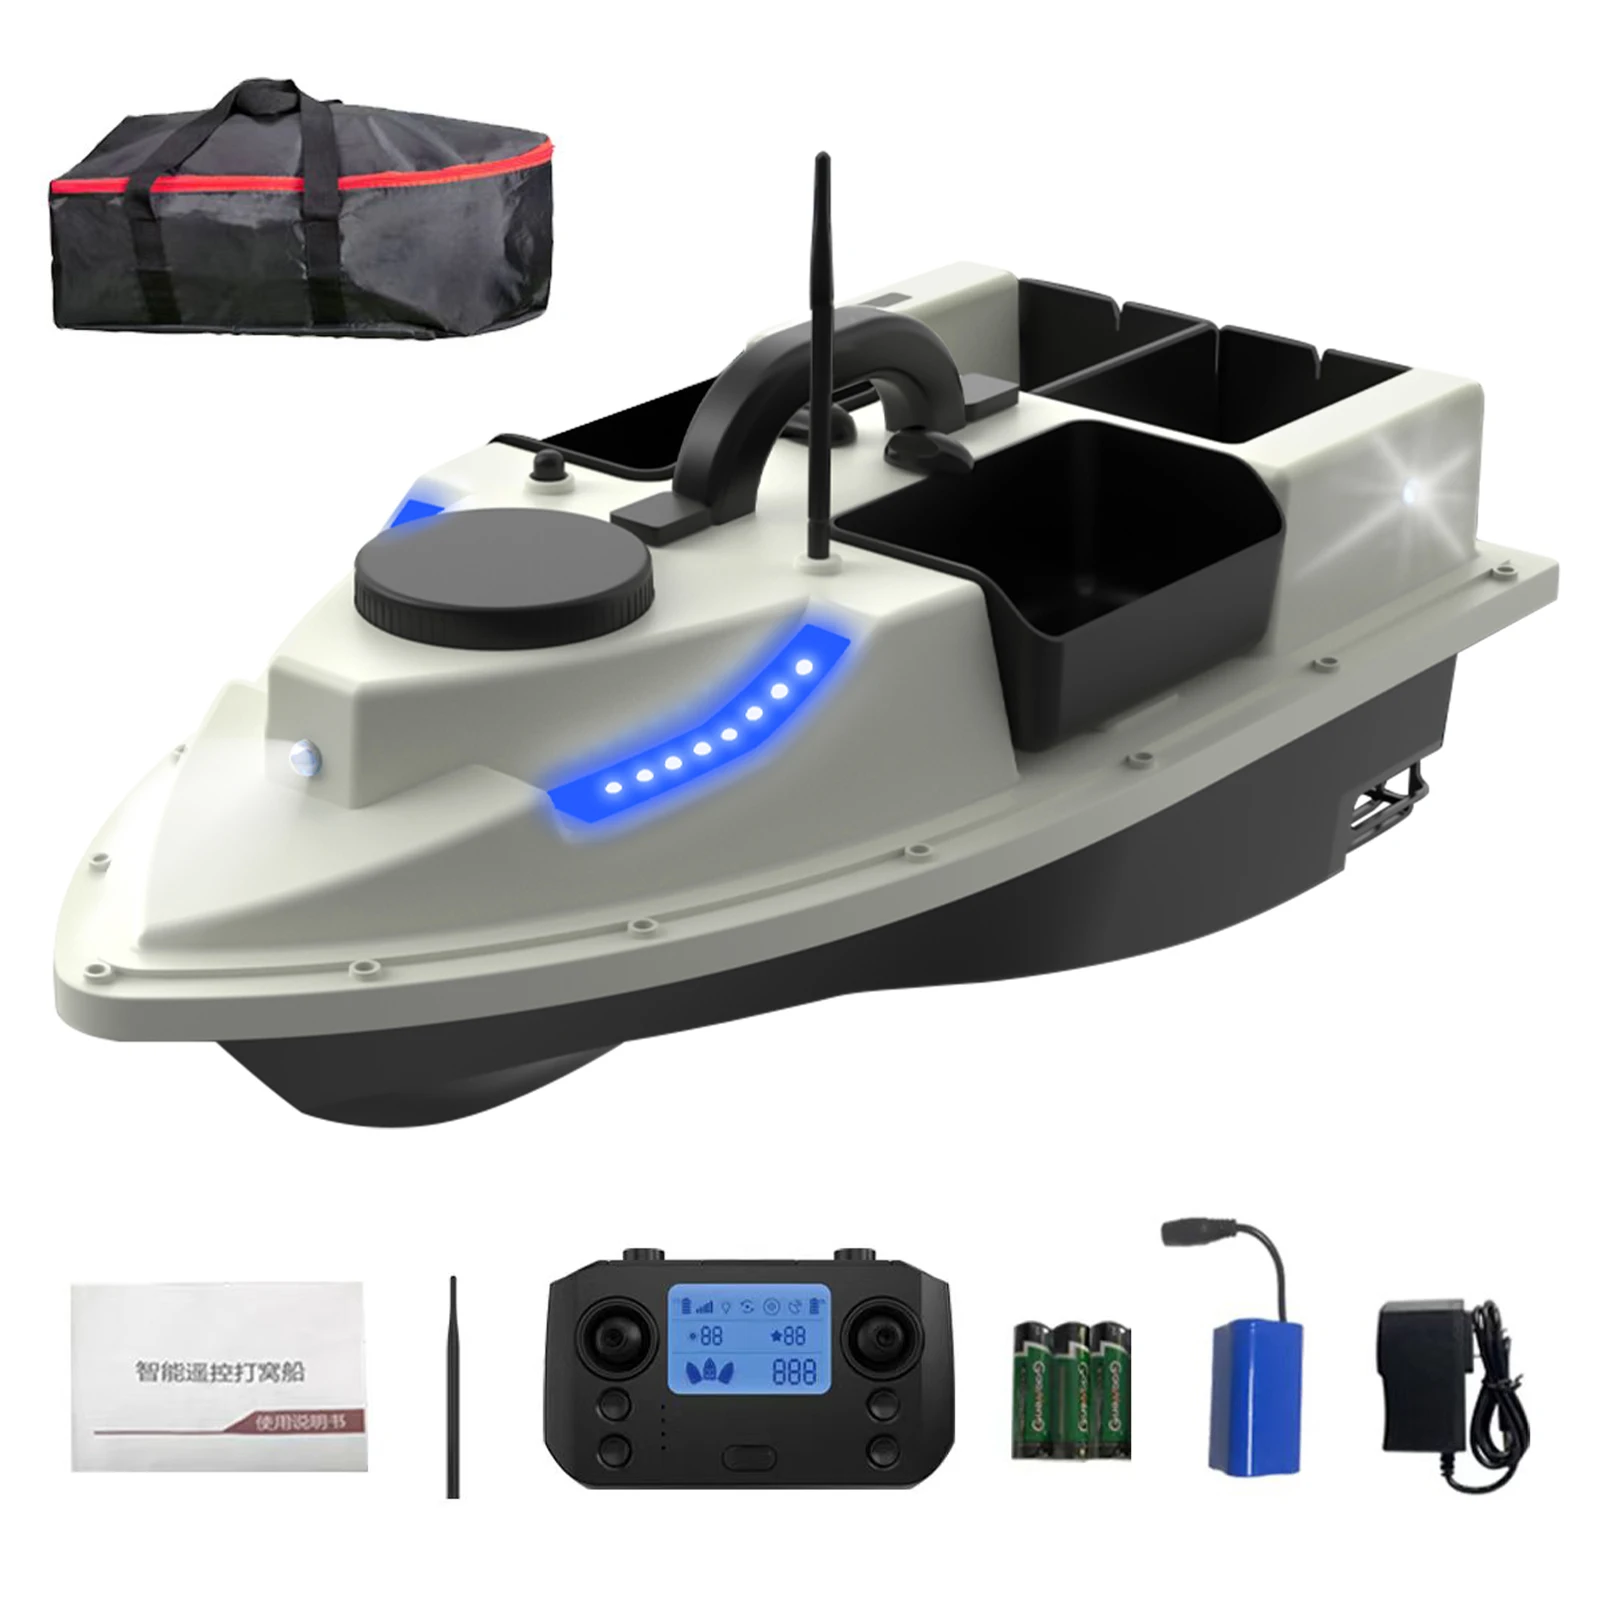 https://ae01.alicdn.com/kf/Sdd3316bc2e0541c080987ea63697ba397/GPS-Fishing-Bait-Boat-500M-Wireless-Remote-Control-RC-Bait-Boat-Fishing-Feeder-Boat-Ship-4.jpg